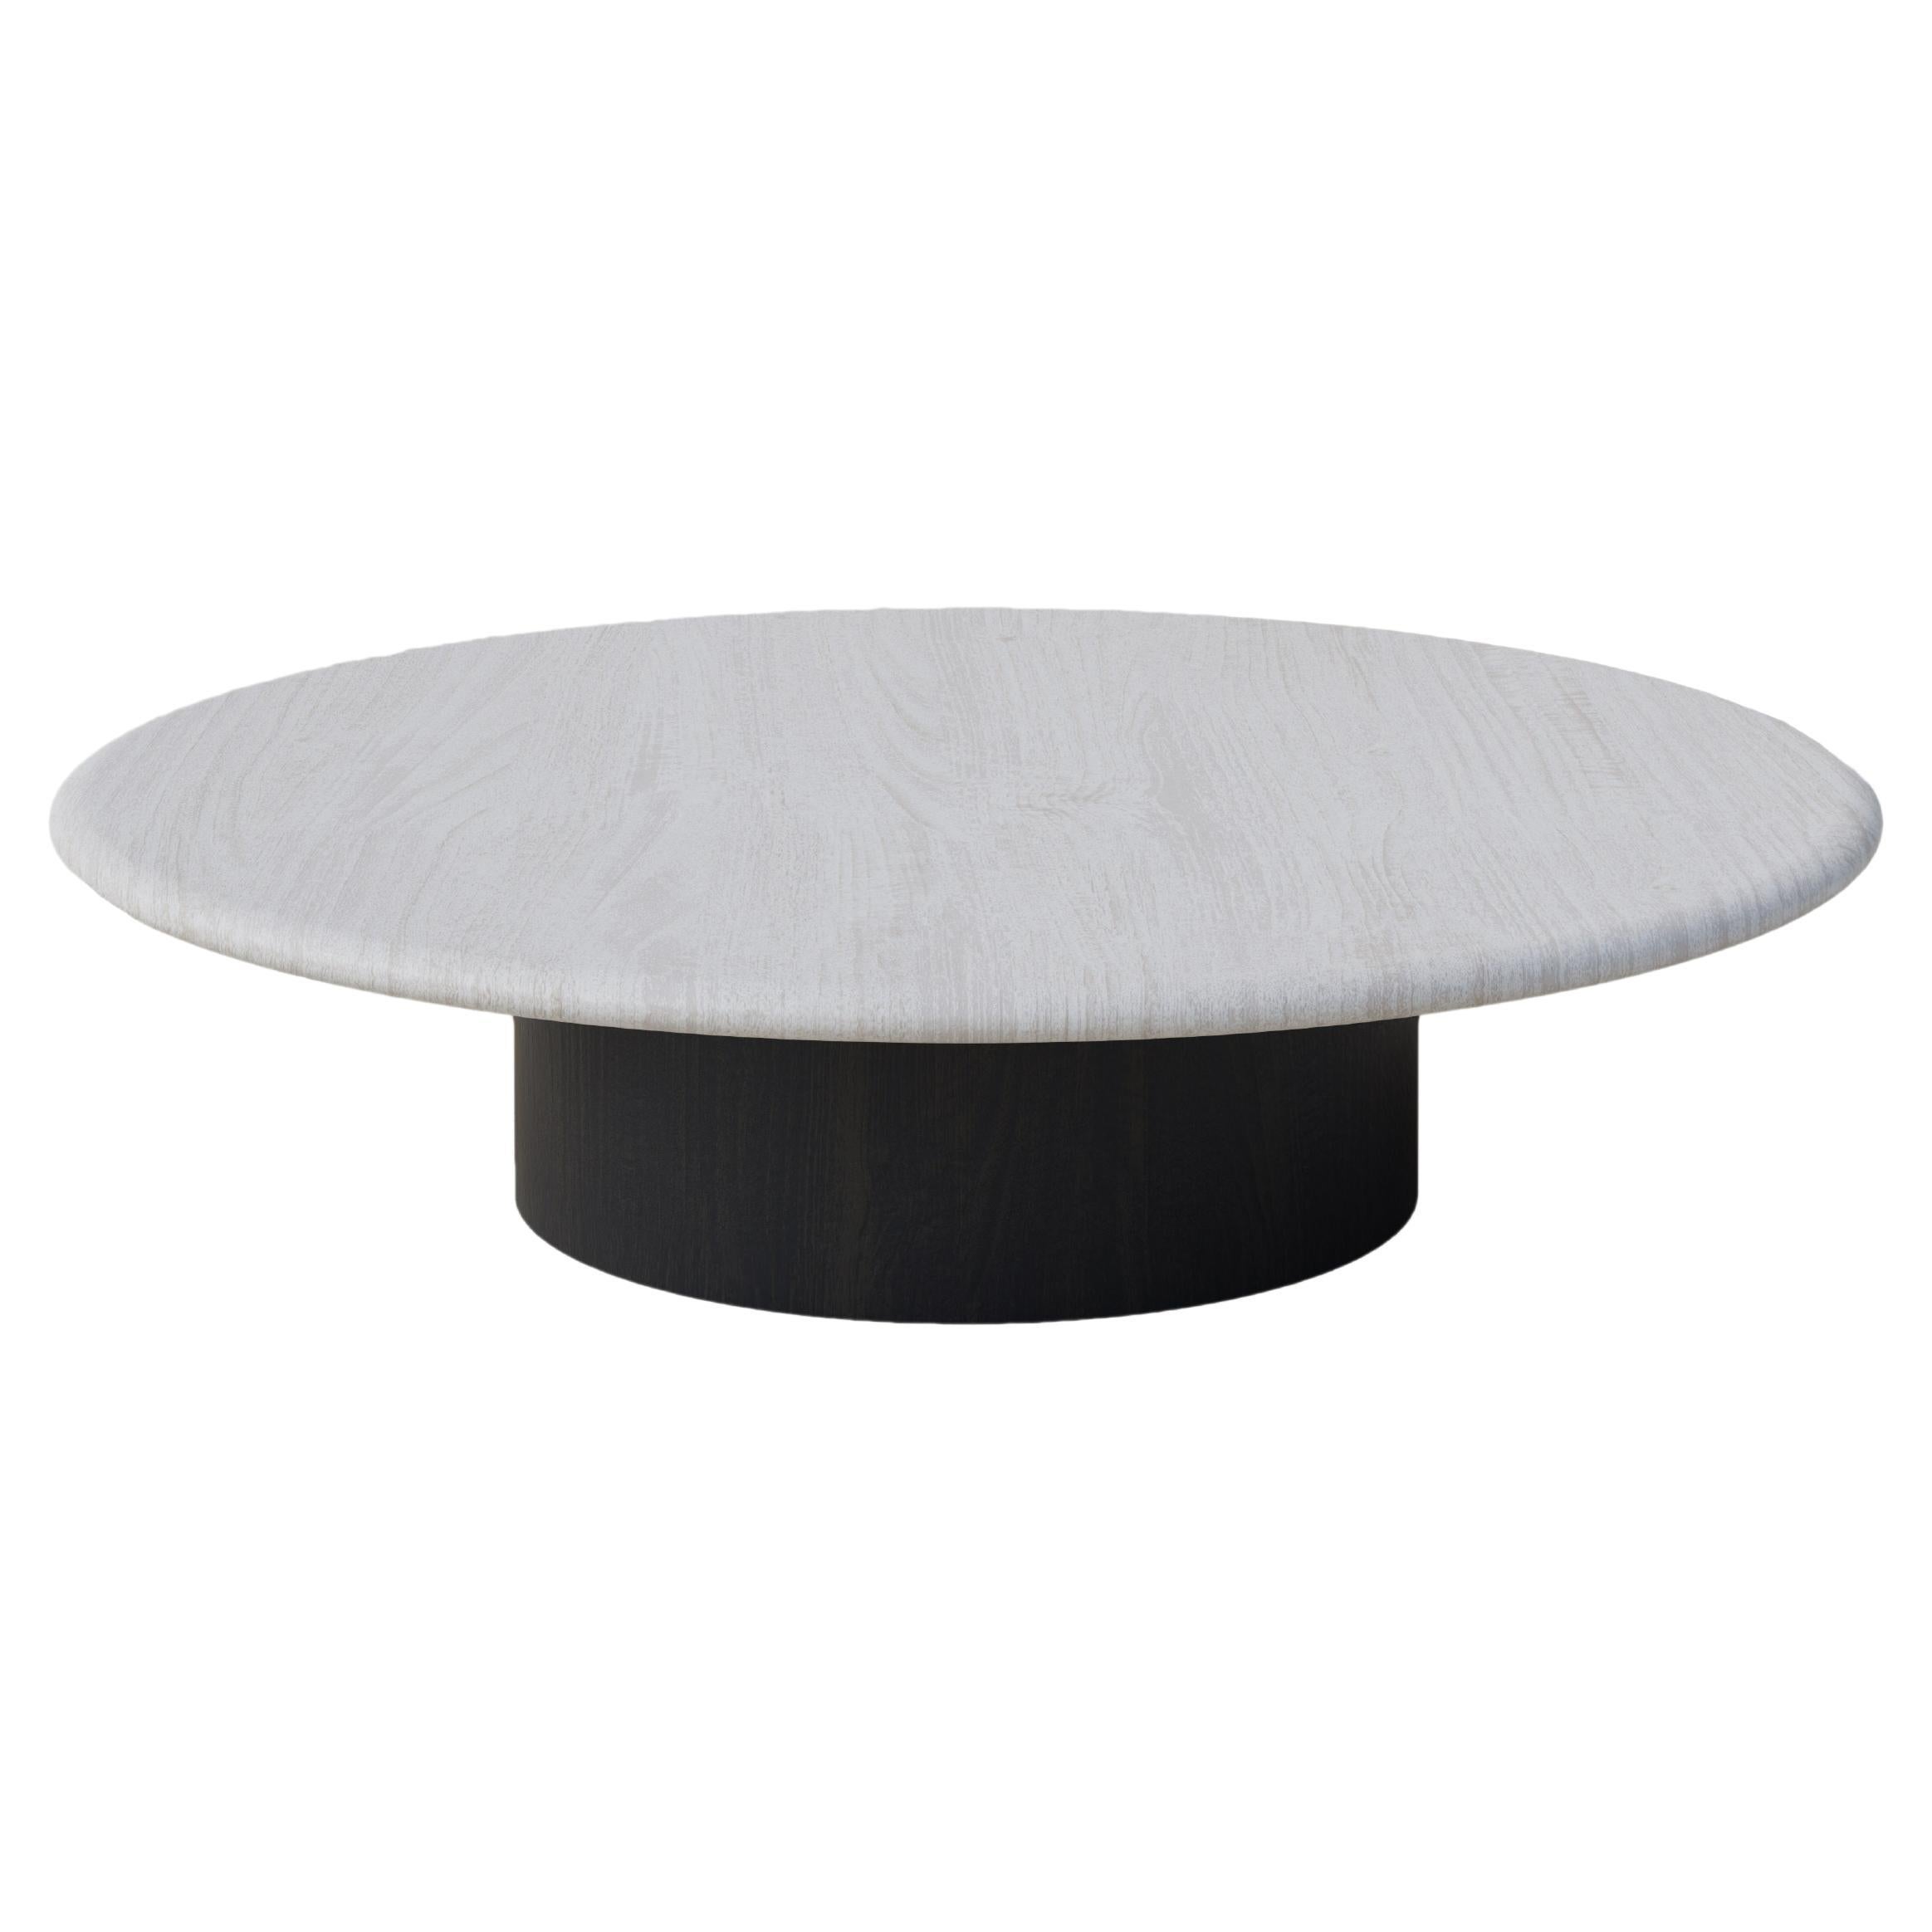 Table basse en forme de goutte d'eau, 1000, chêne blanc / chêne noir